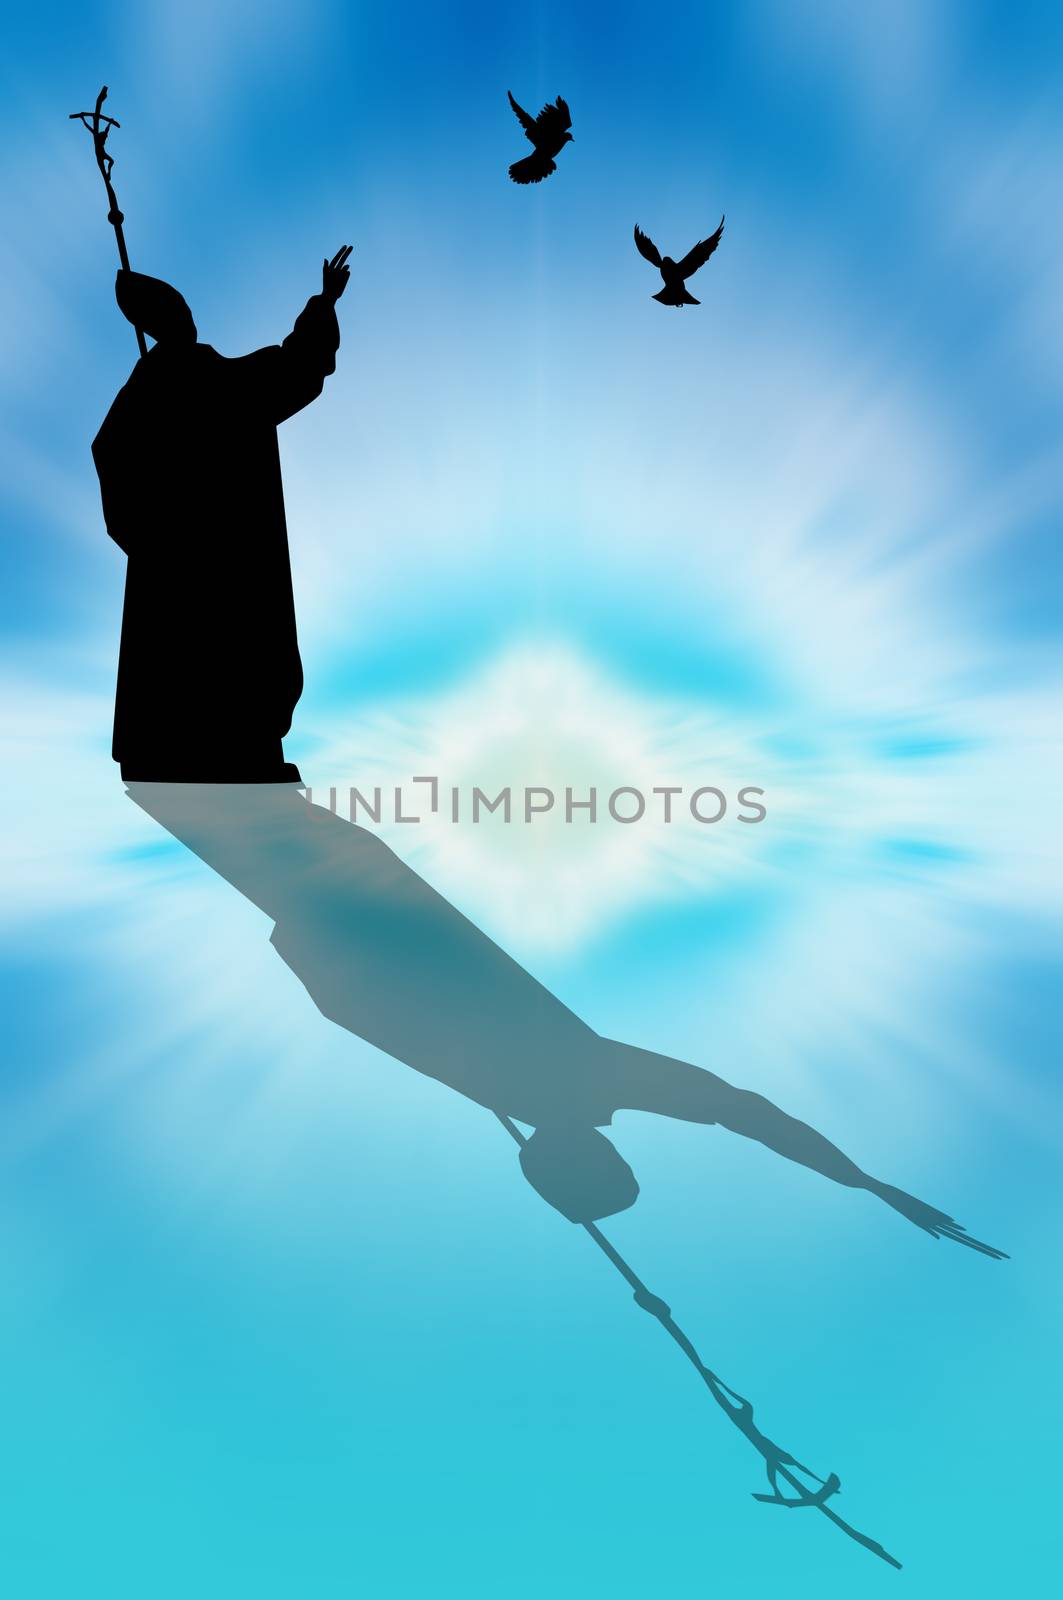 Pope silhouette